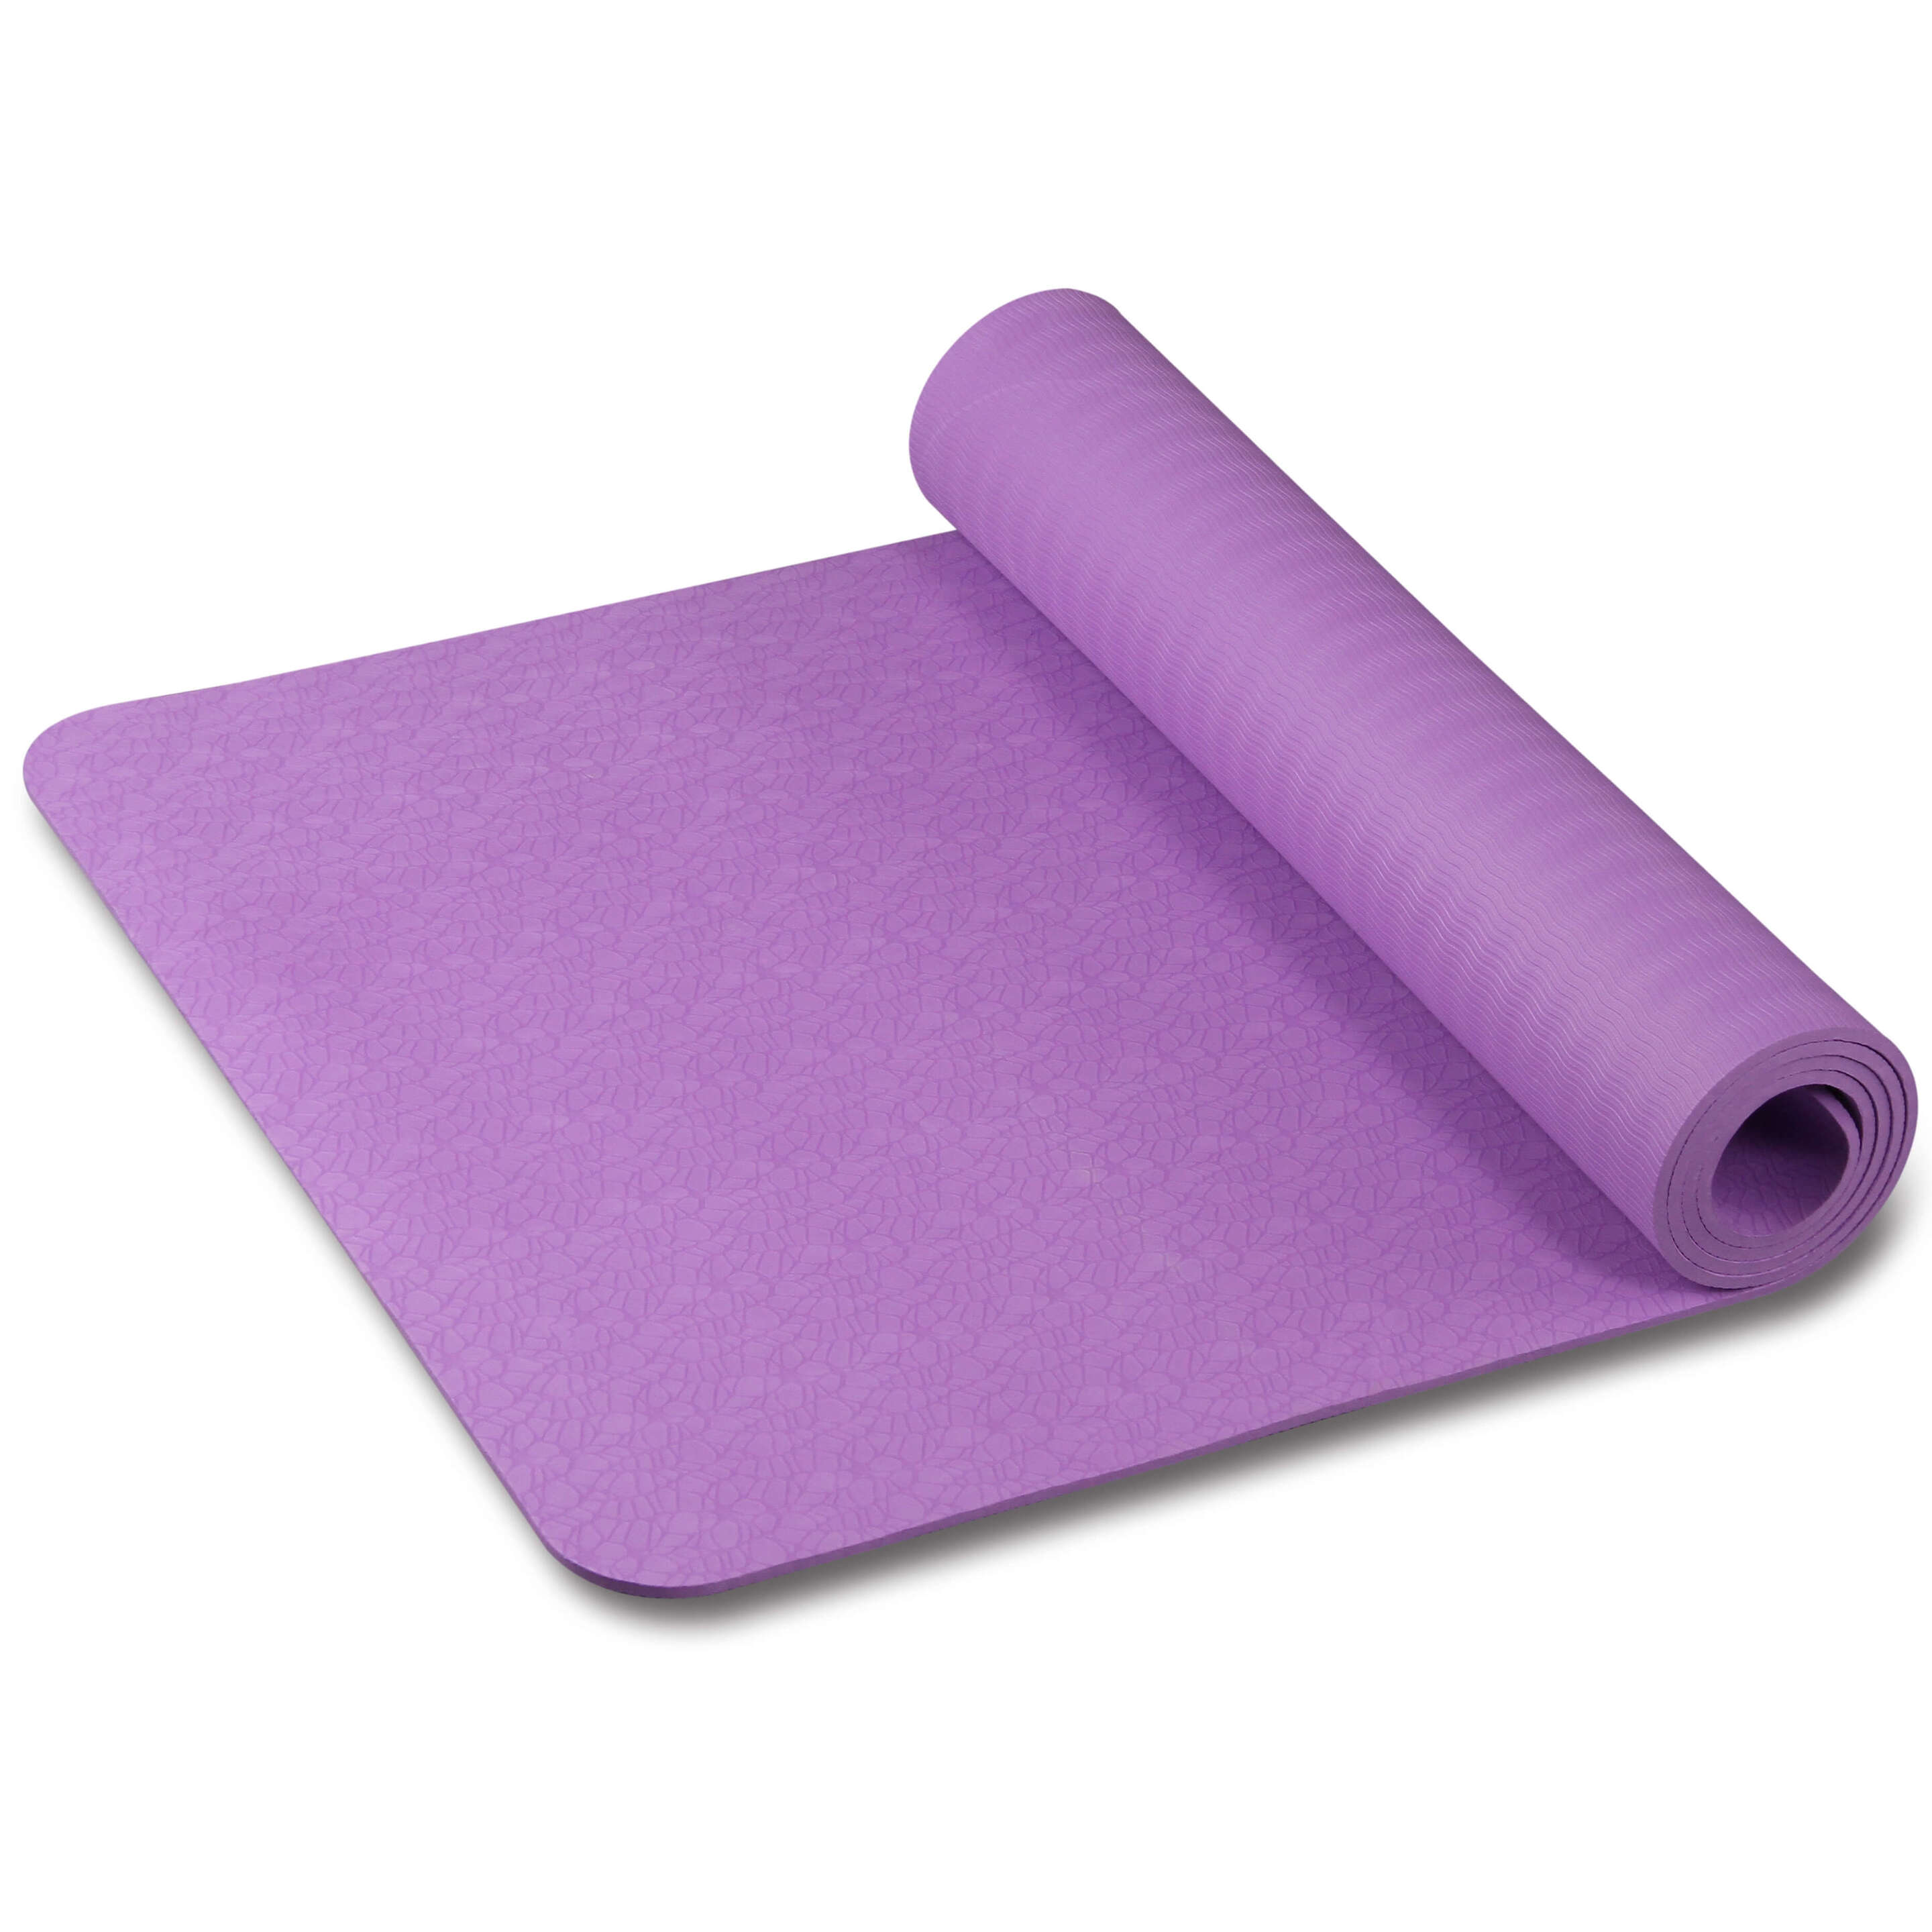 Esterilla De Yoga Y Fitness Indigo Tpe Violeta 173*61*0.6 Cm - violeta - 